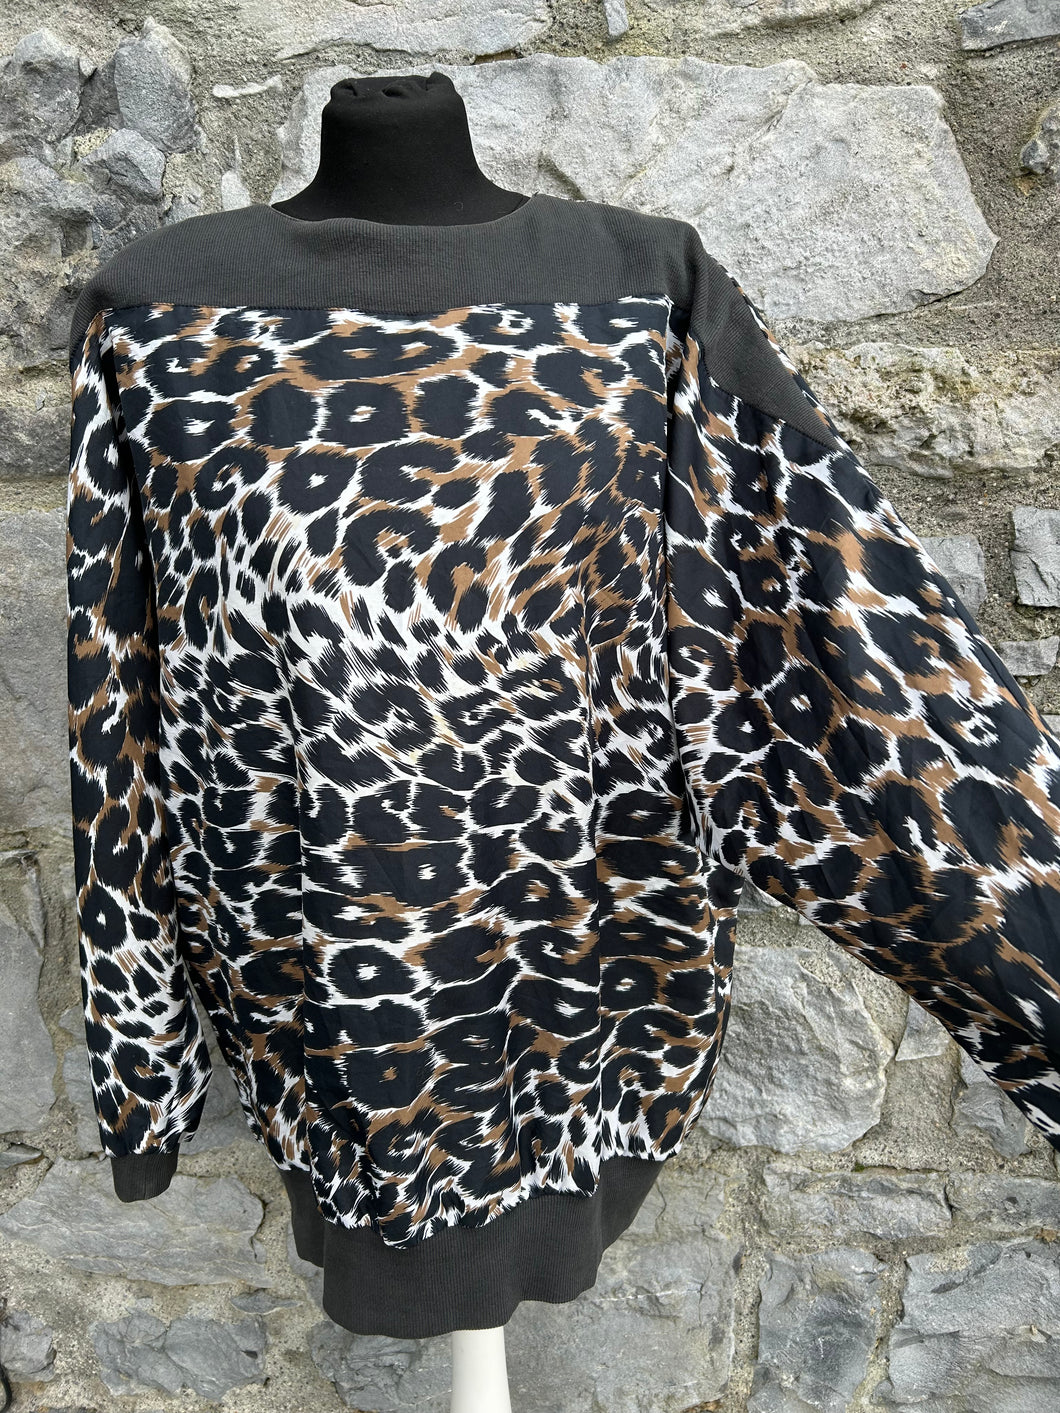 90s leopard print long top  uk 16-18